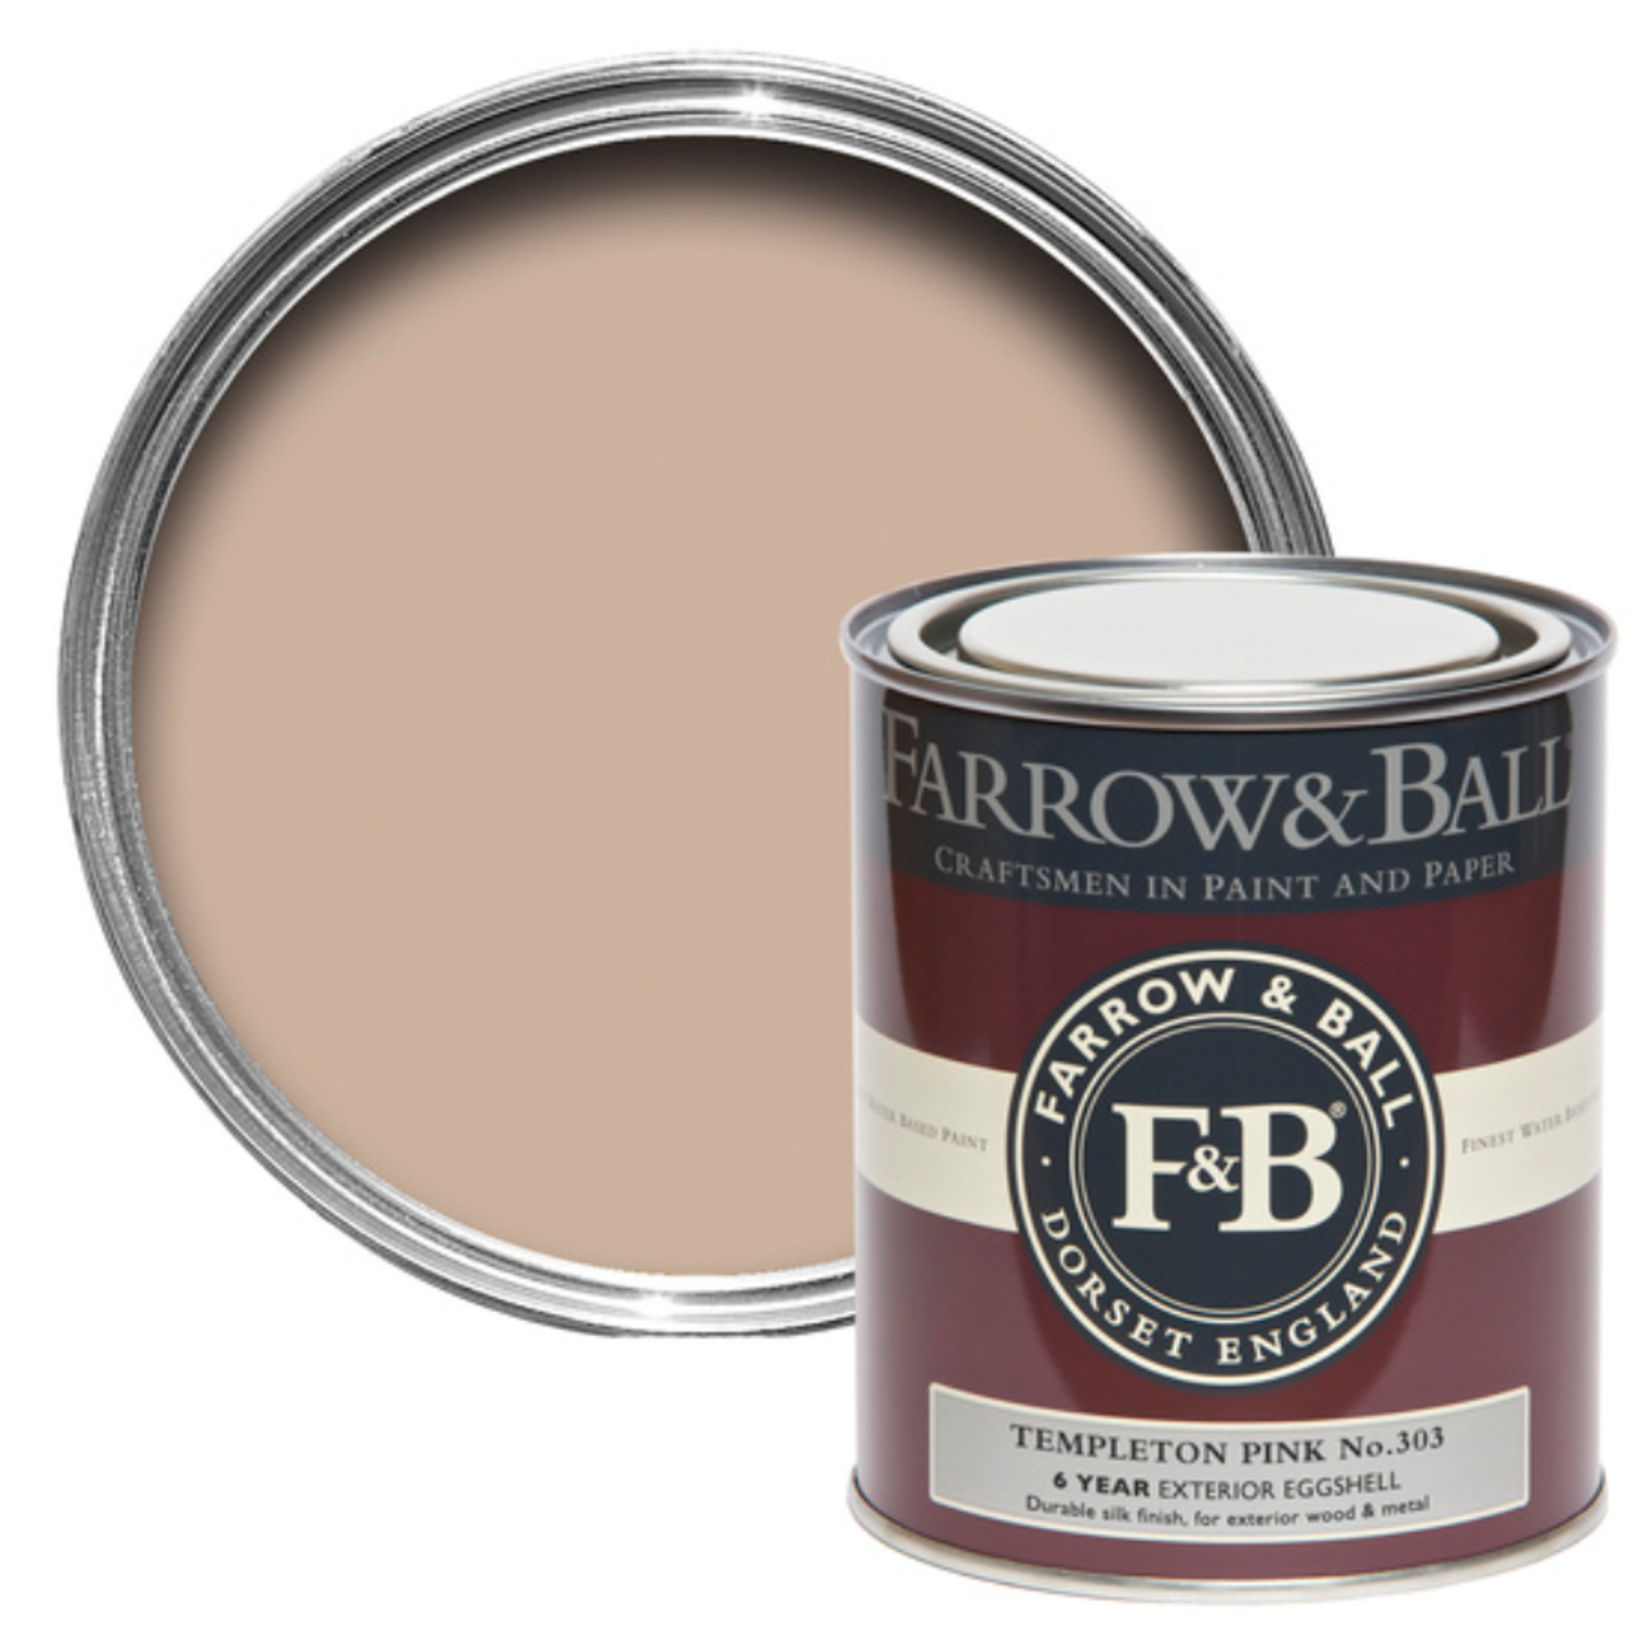 Farrow & Ball 750ml Exterior Eggshell Templeton Pink No.303